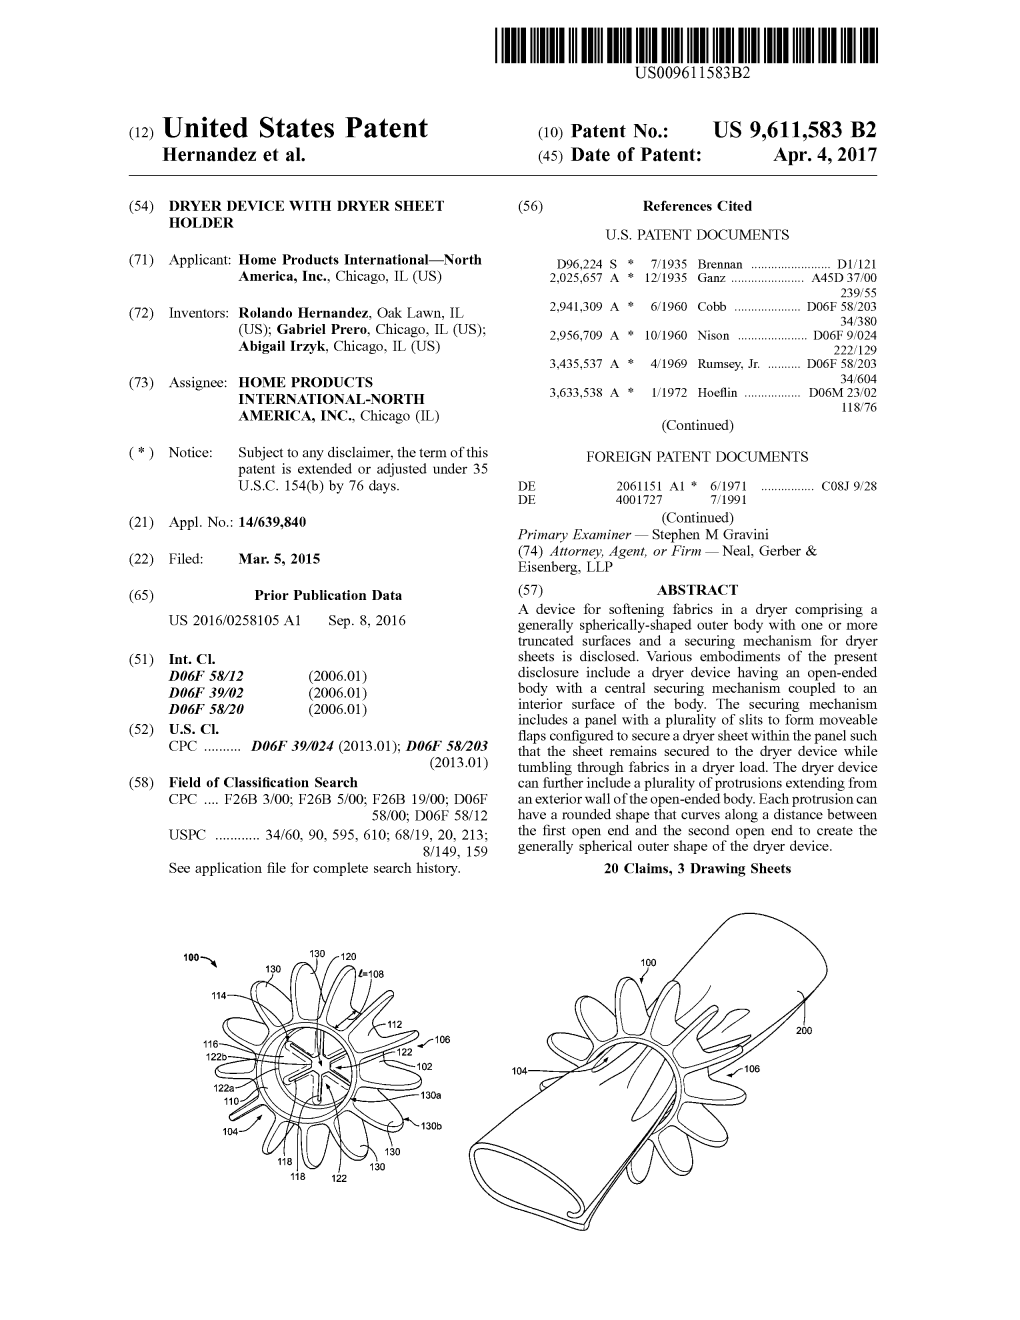 (12) United States Patent (10) Patent No.: US 9,611,583 B2 Hernandez Et Al